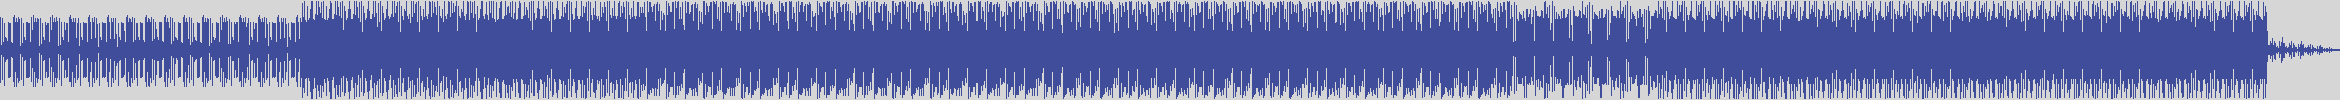 nf_boyz_records [NFY056] Rober Hazzard - Godfather [Extended Tribal Mix] audio wave form